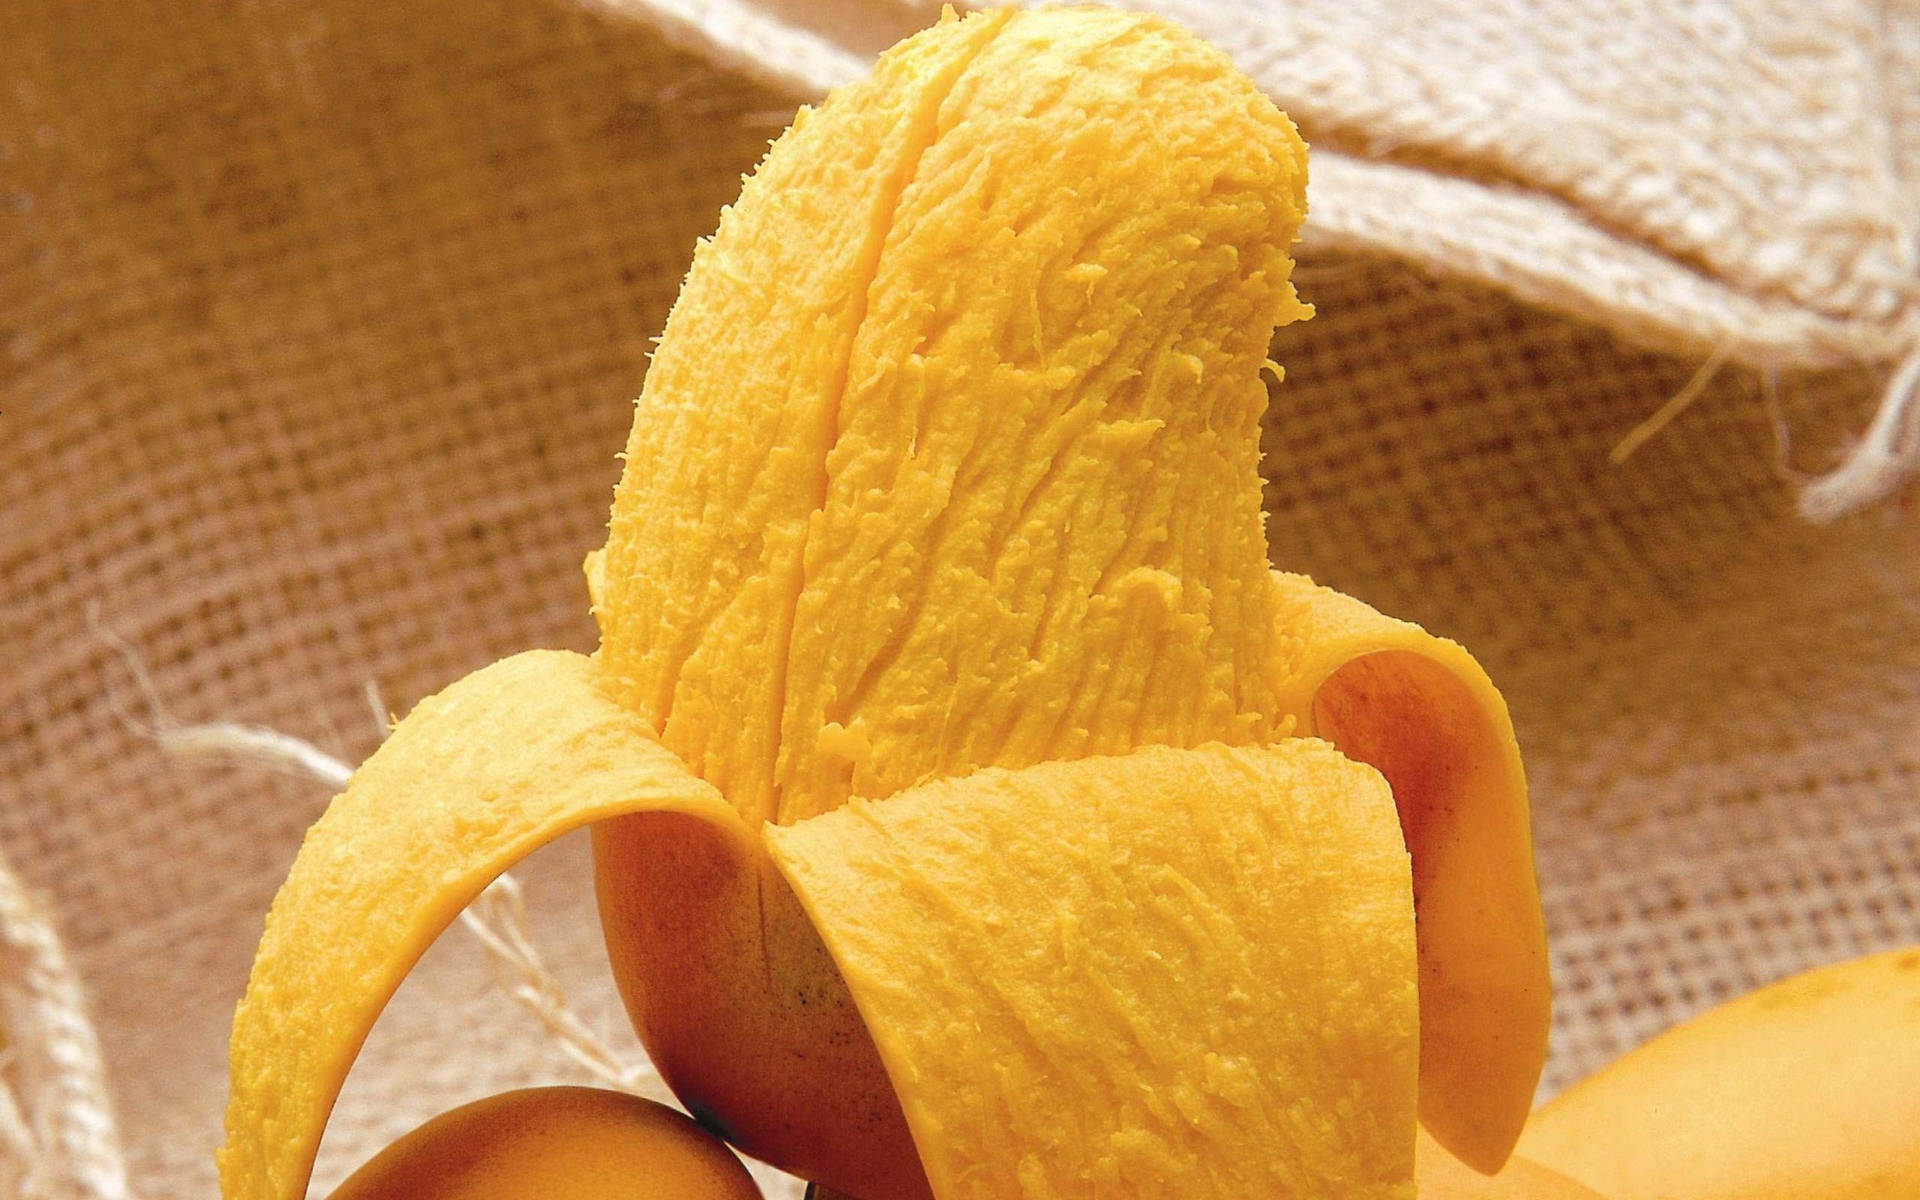 A Perfectly Ripe, Delicious Mango